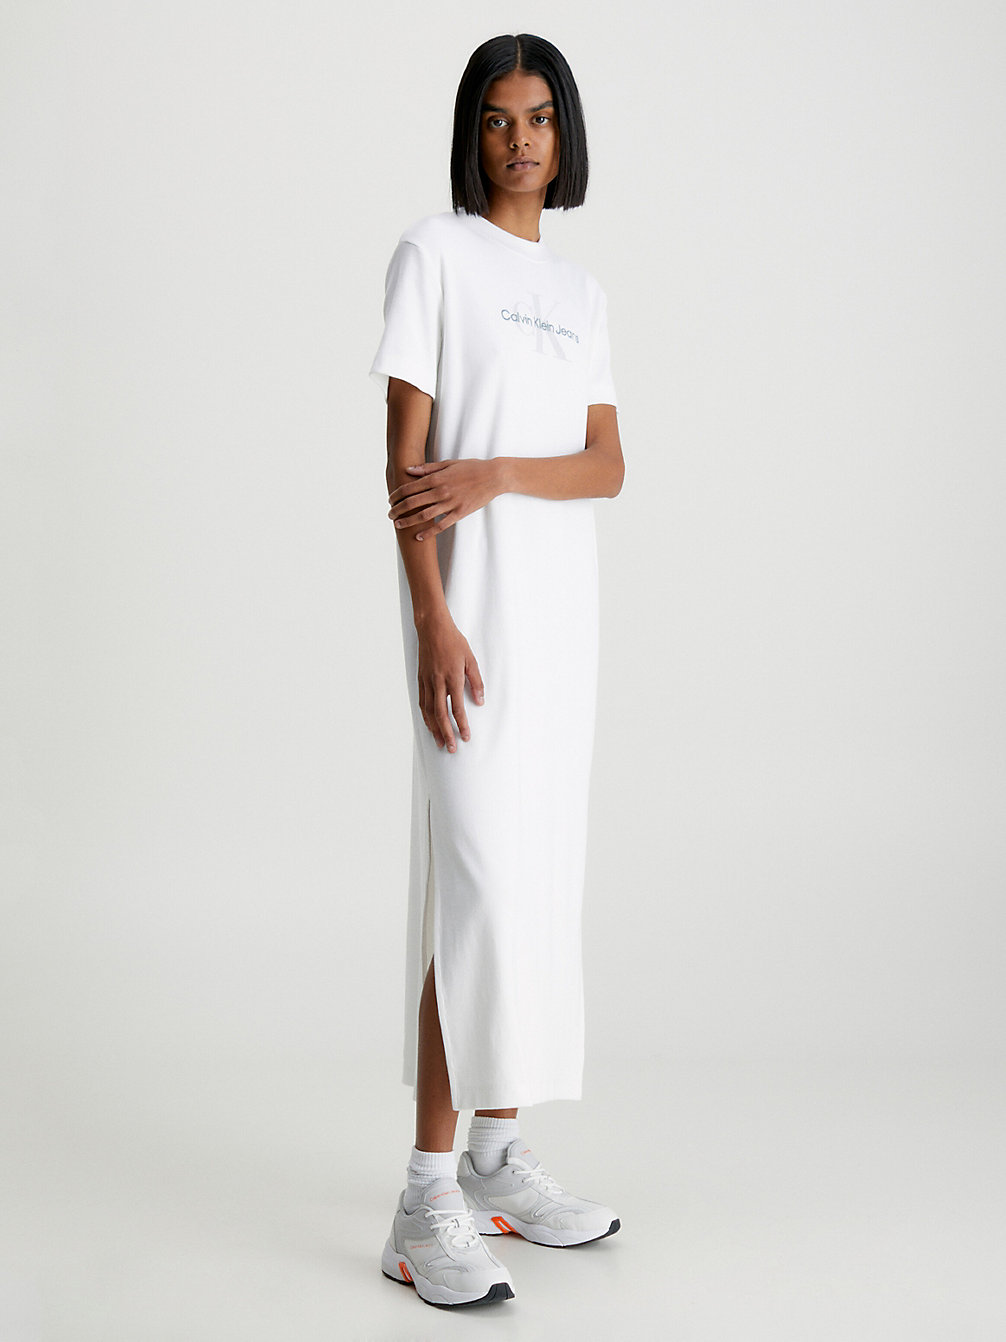 BRIGHT WHITE > Sukienka Typu T-Shirt Maxi Z Monogramem > undefined Kobiety - Calvin Klein